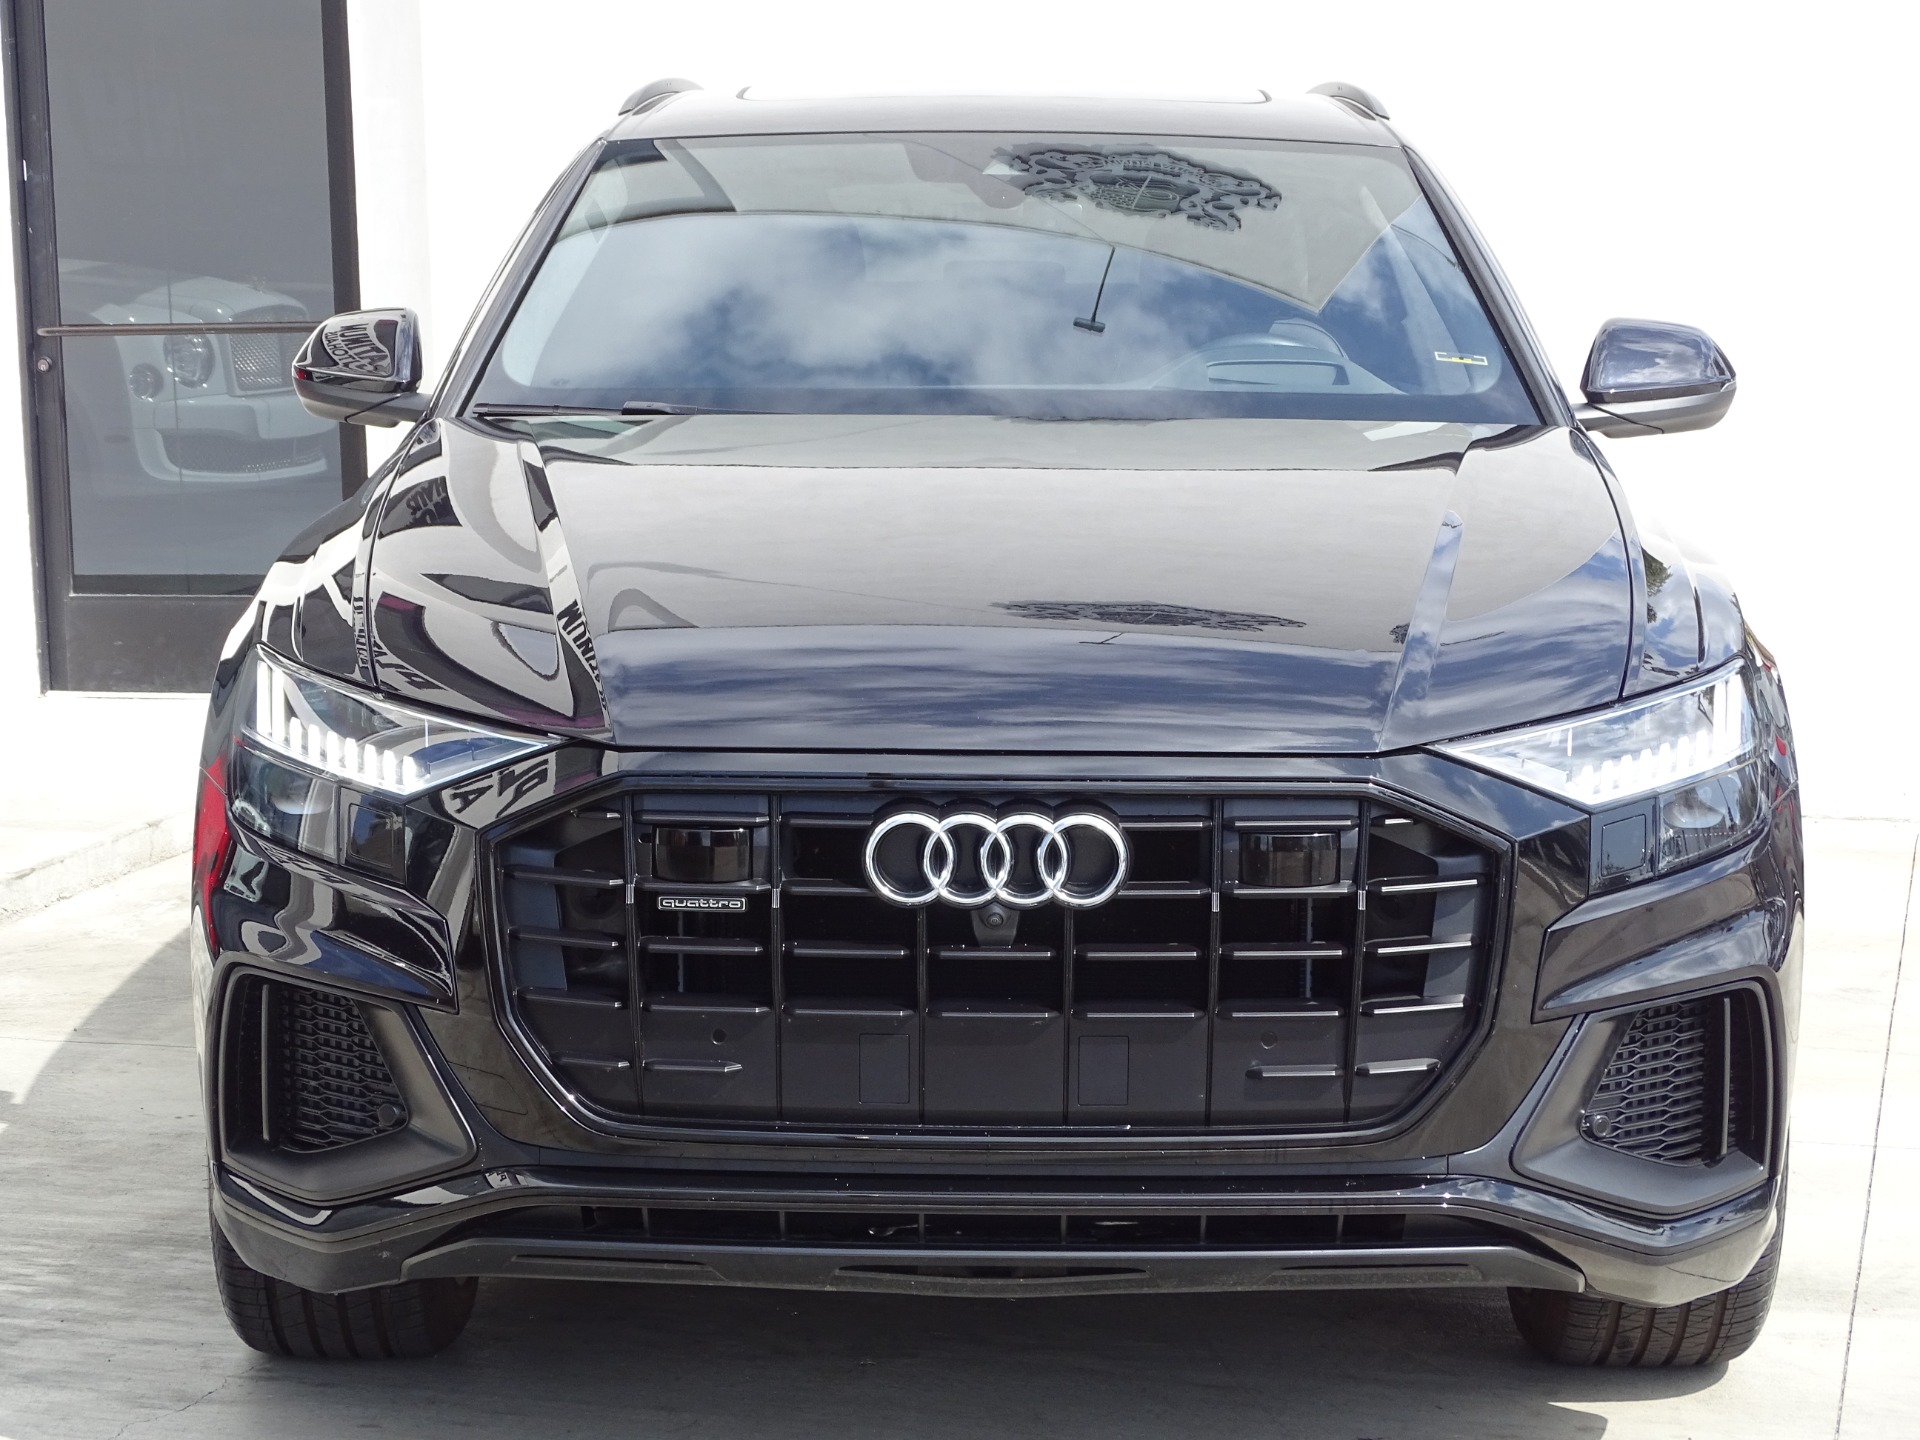 https://www.platinumautohaus.com/imagetag/13298/8/l/Used-2019-Audi-Q8-30T-quattro-Prestige.jpg